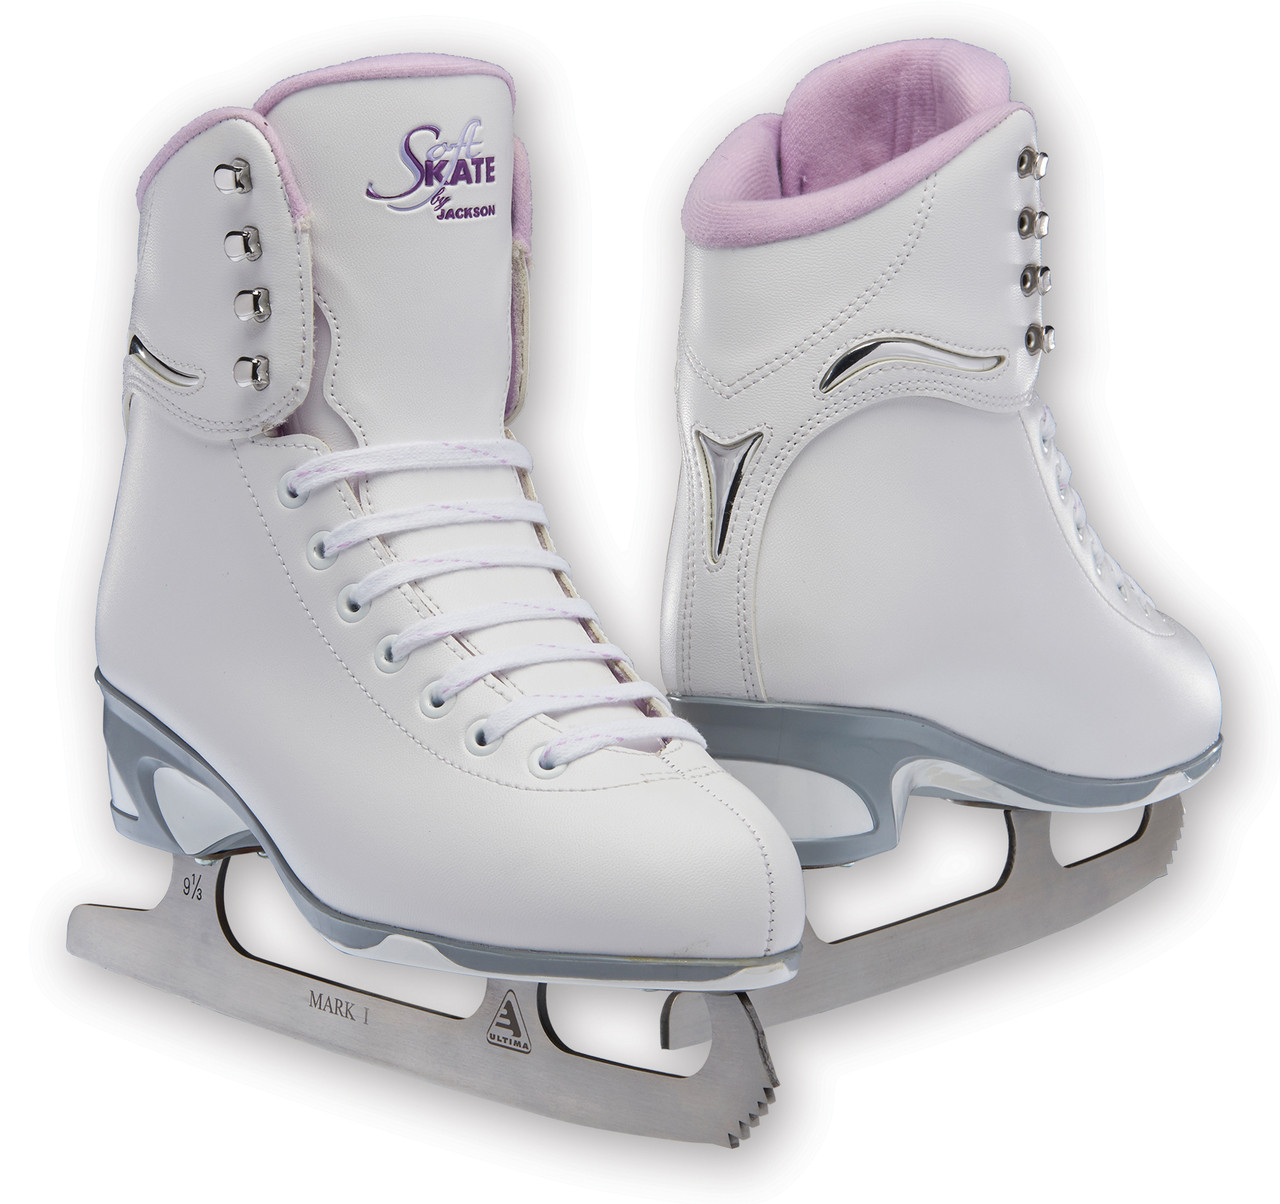 Jackson Ice Skates SoftSkate JS180 Women's